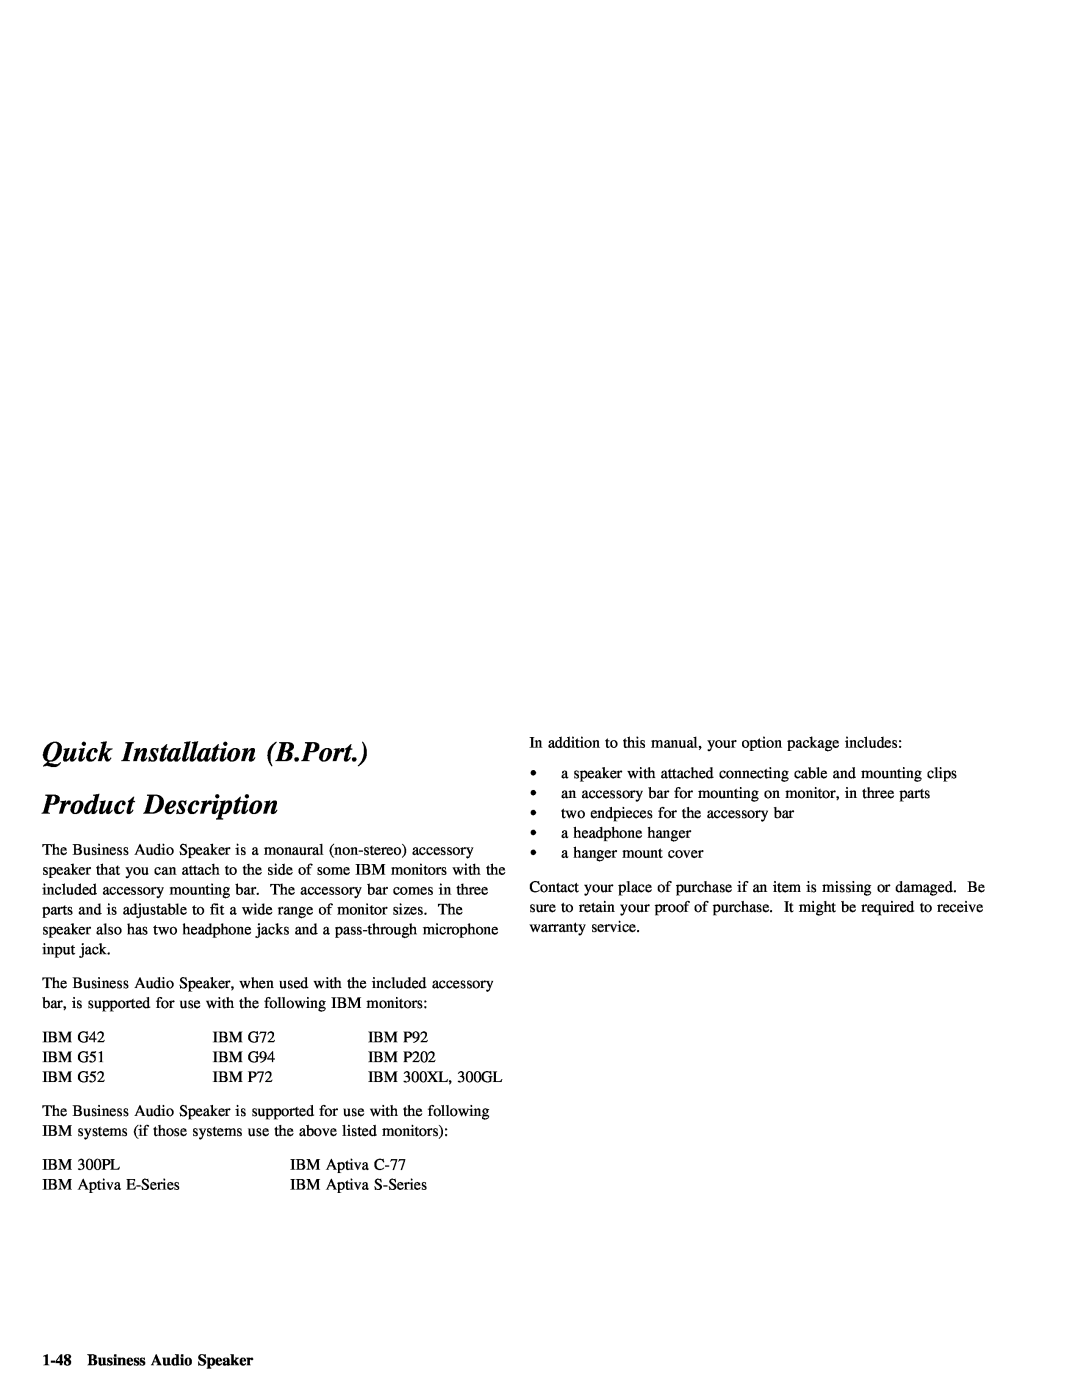 IBM 05L1596 manual Quick Installation B.Port, 1-48Business Audio Speaker, Description, Product 